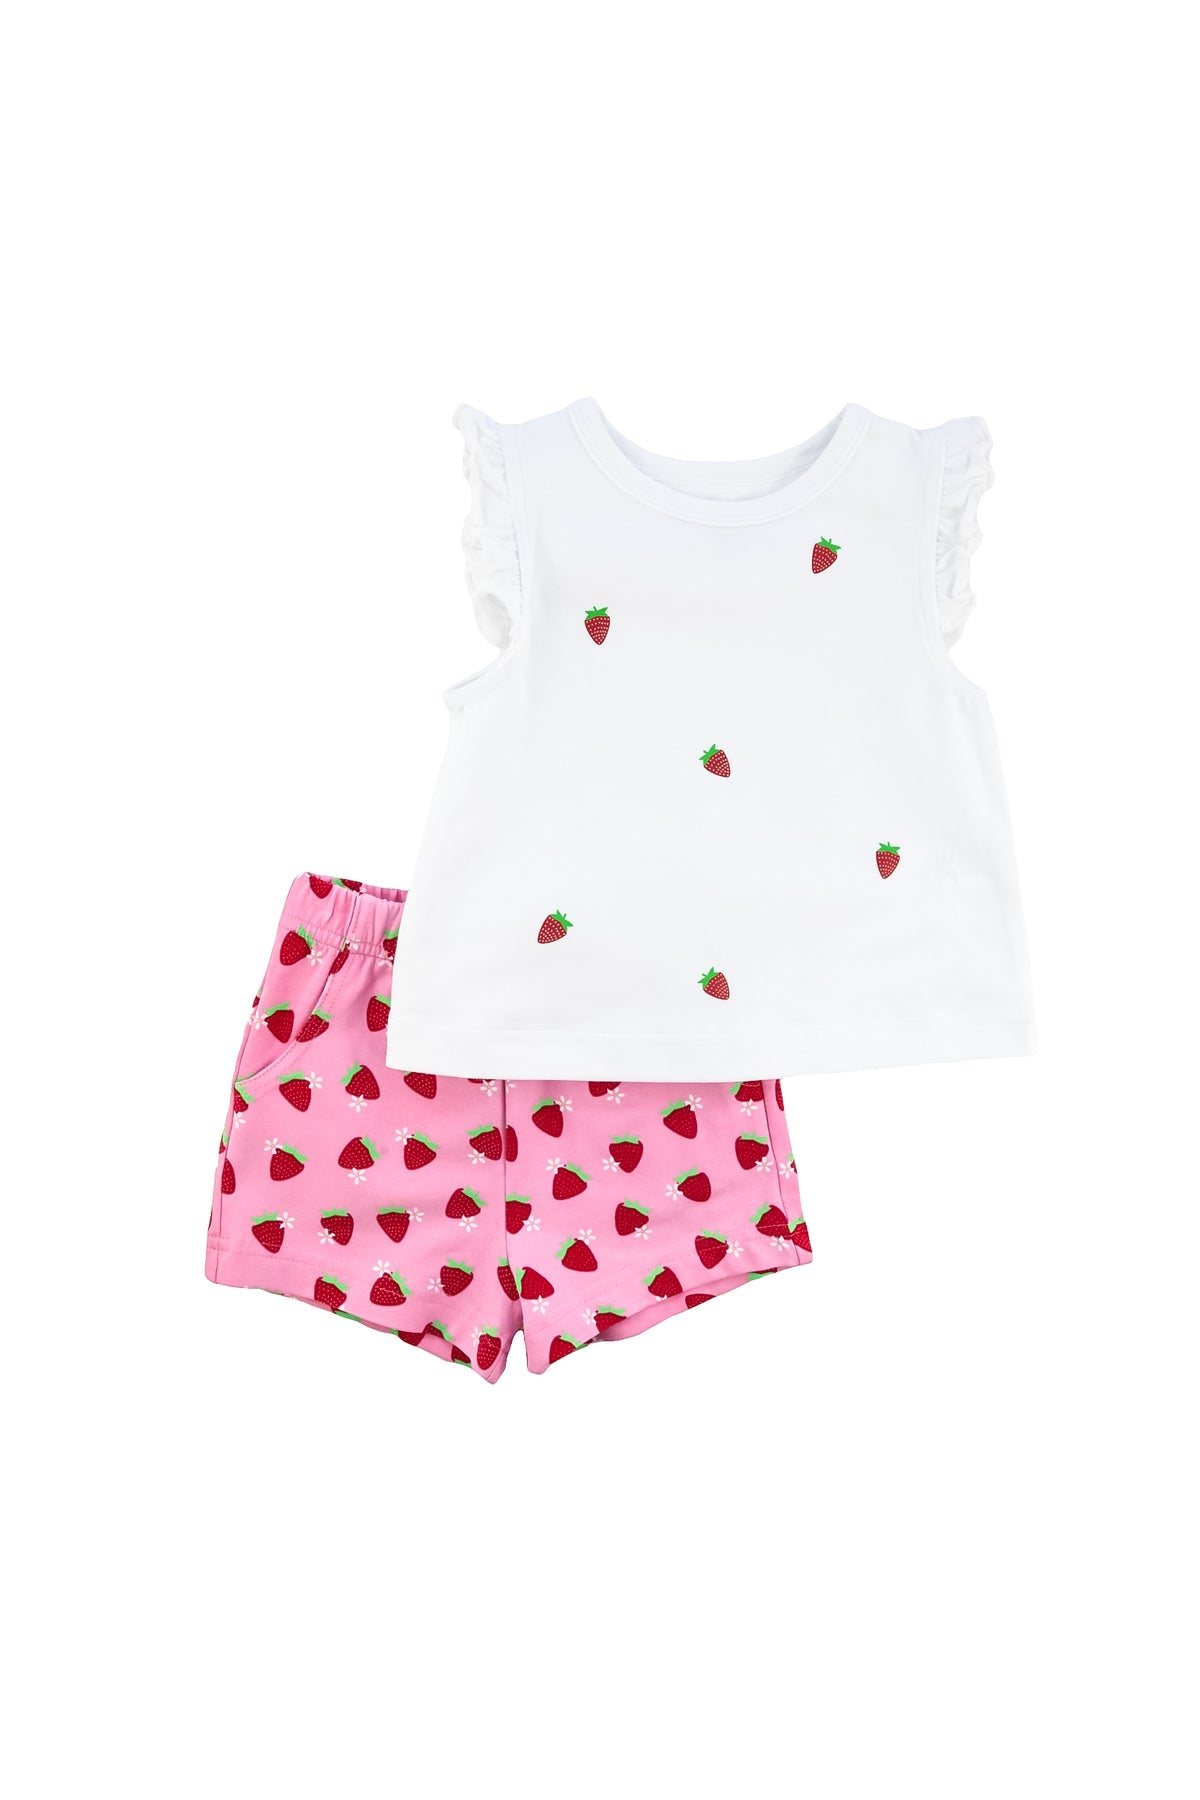 Florence Eiseman girls strawberry top & shorts set